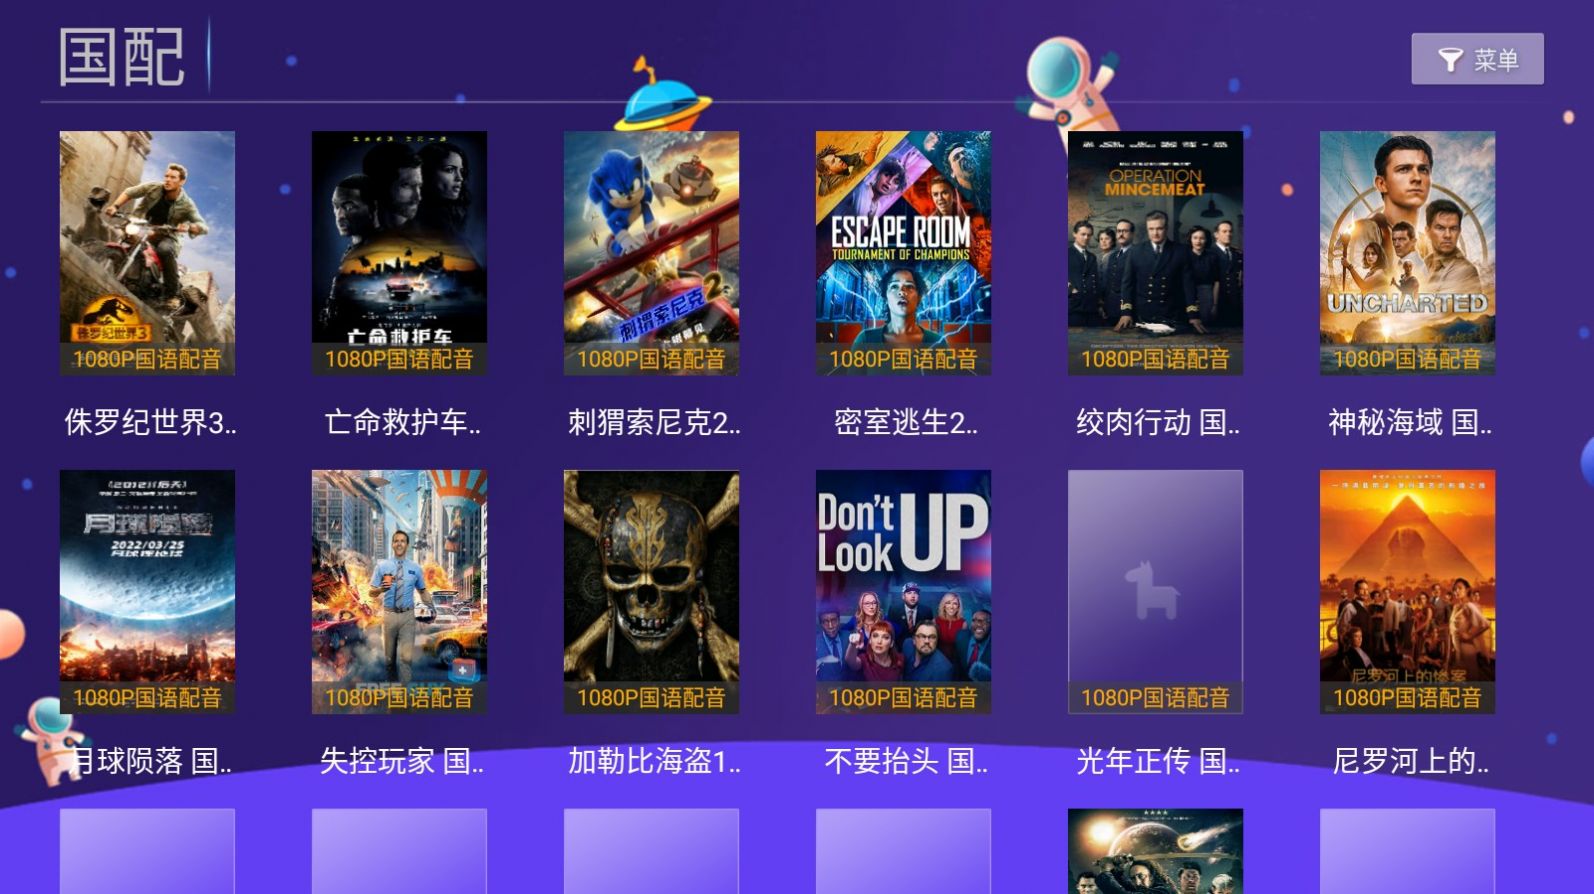 9e国语TV影视app最新版